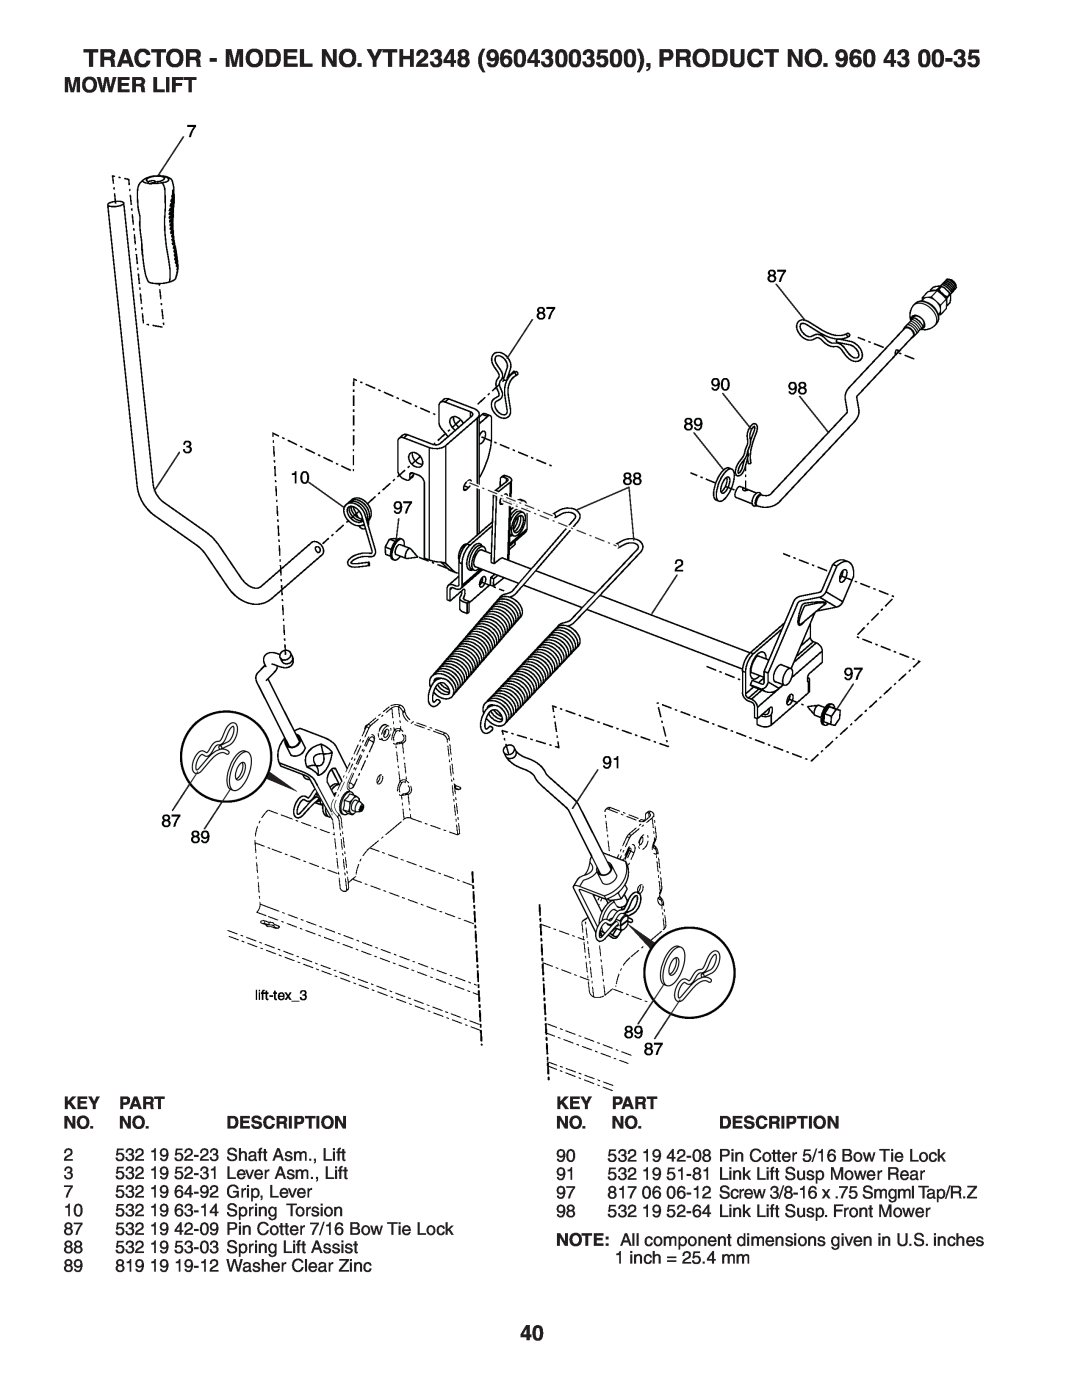 Husqvarna YTH2348 owner manual Mower Lift, Key Part No. No. Description 